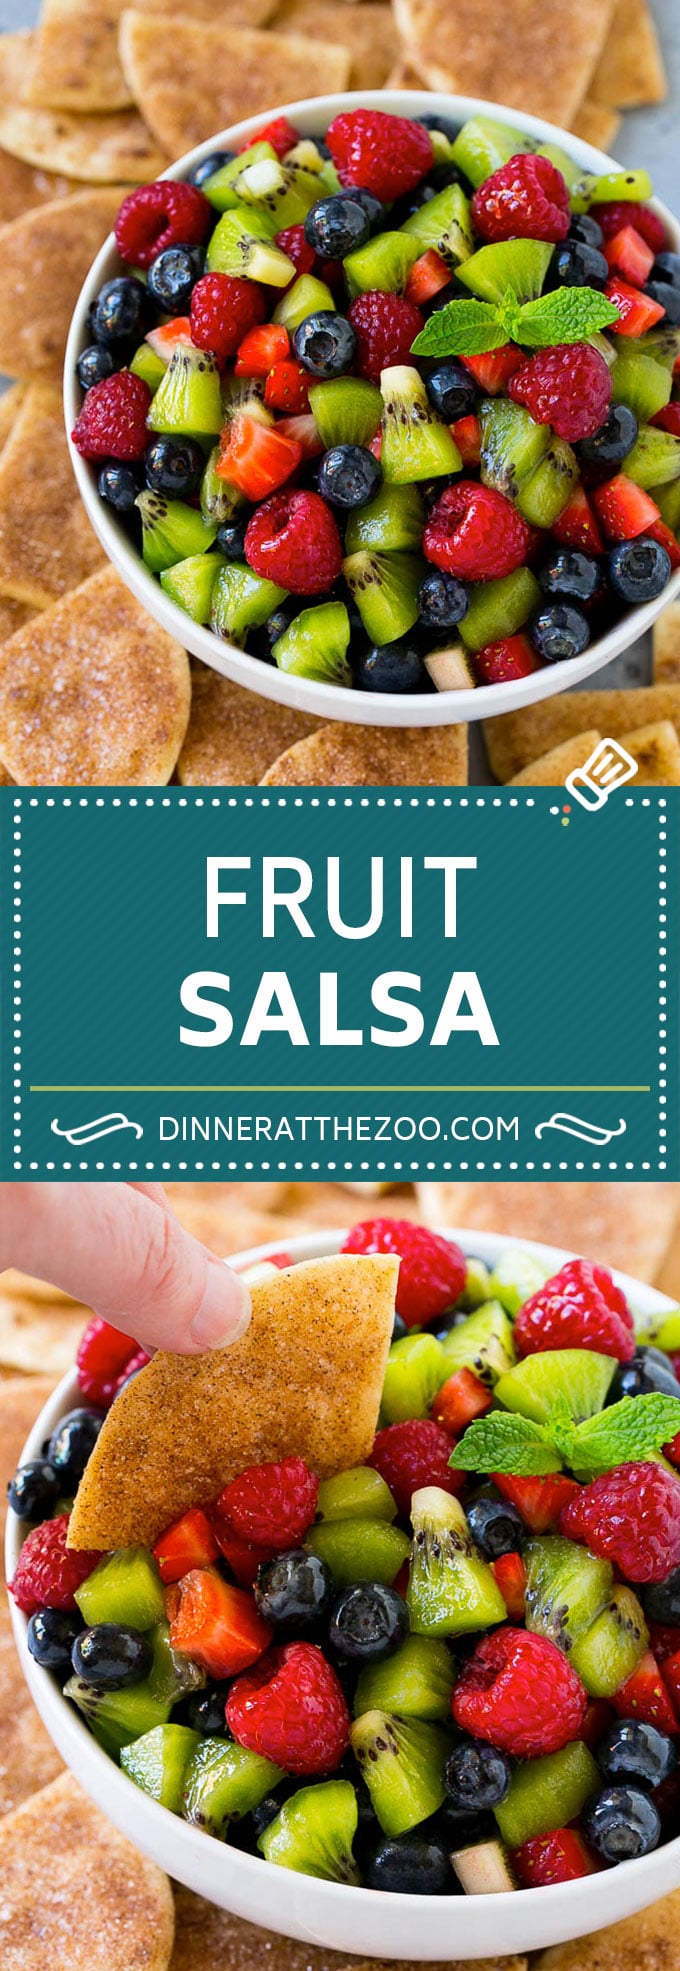 Receta de salsa de frutas |  Postre salsa |  Chips de azúcar y canela |  Receta de fruta